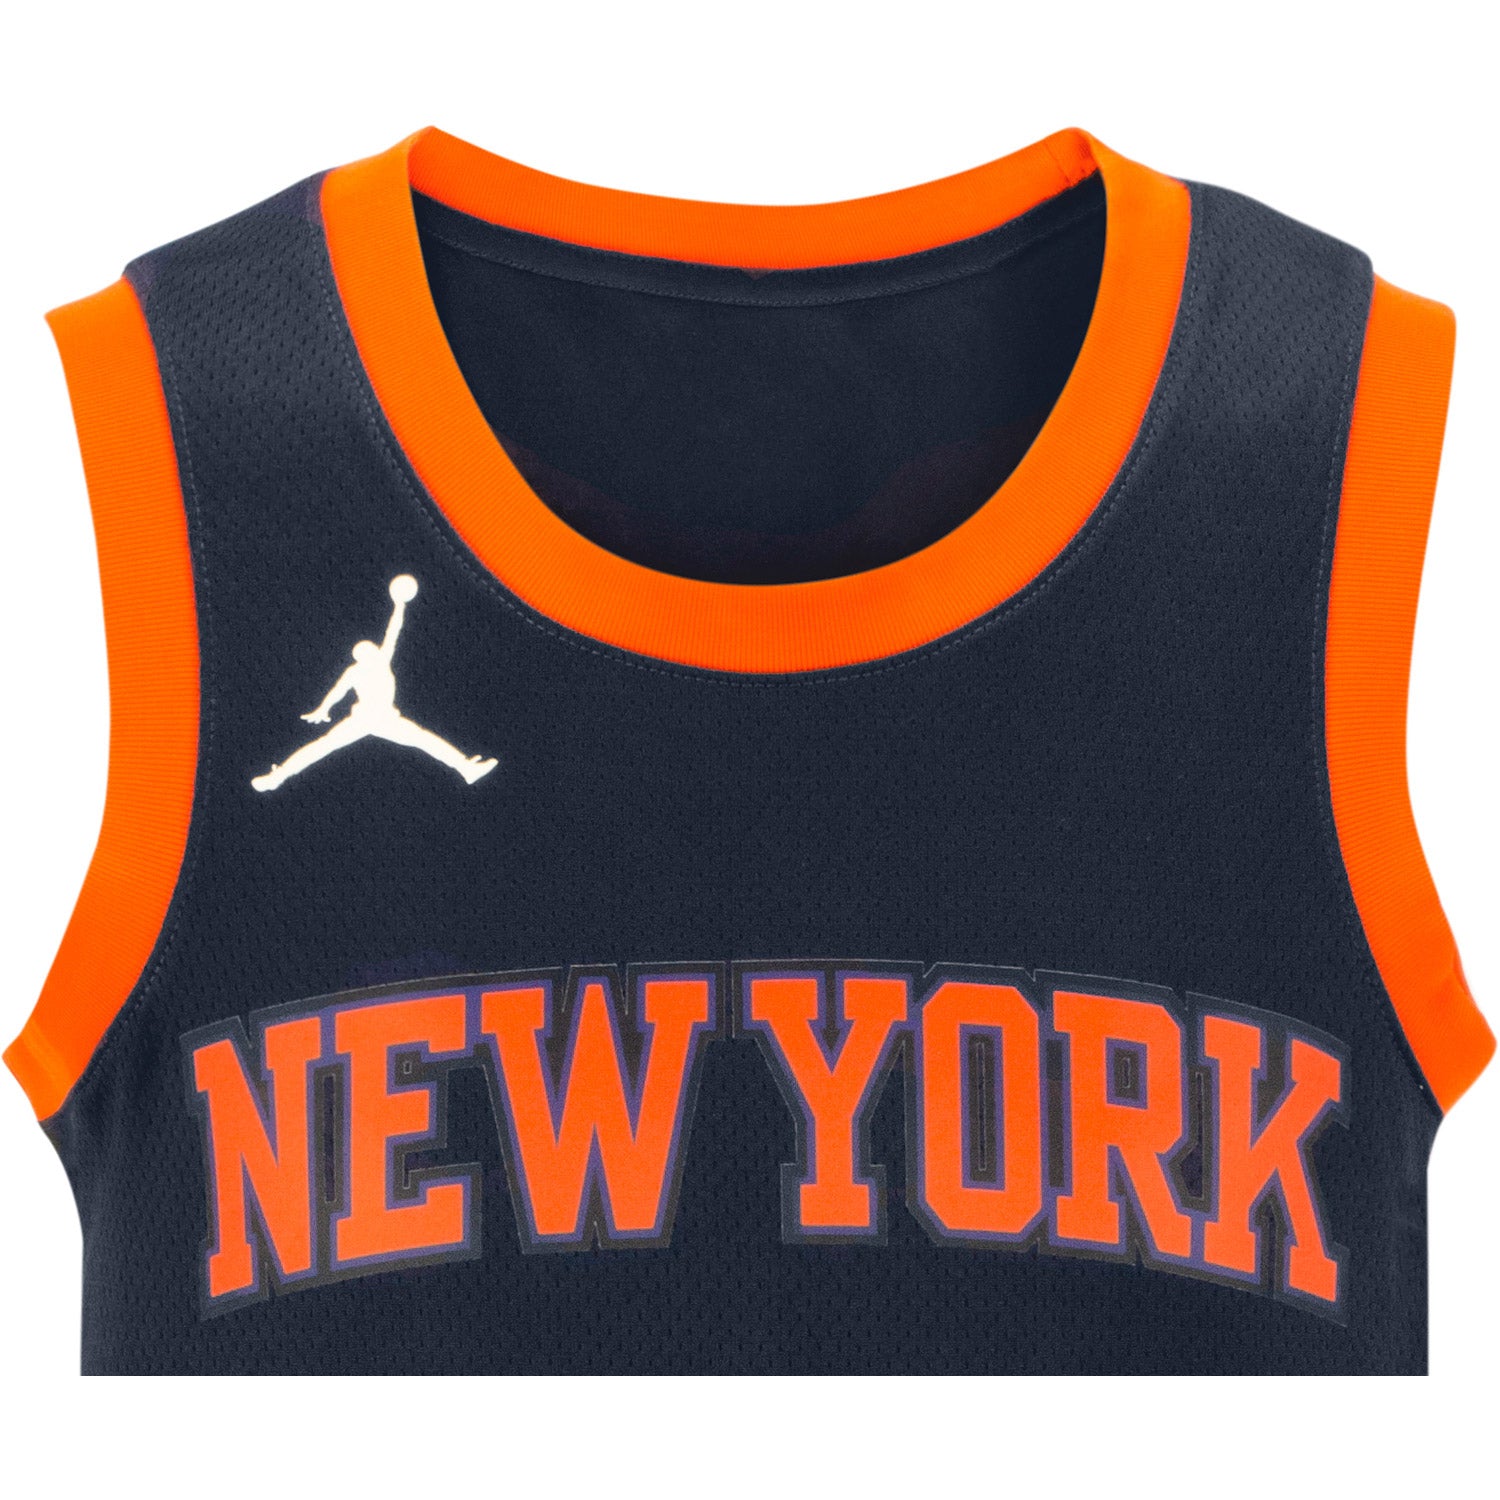 Derrick Rose New York Knicks 2022/23 Swingman Jersey Blue - Icon